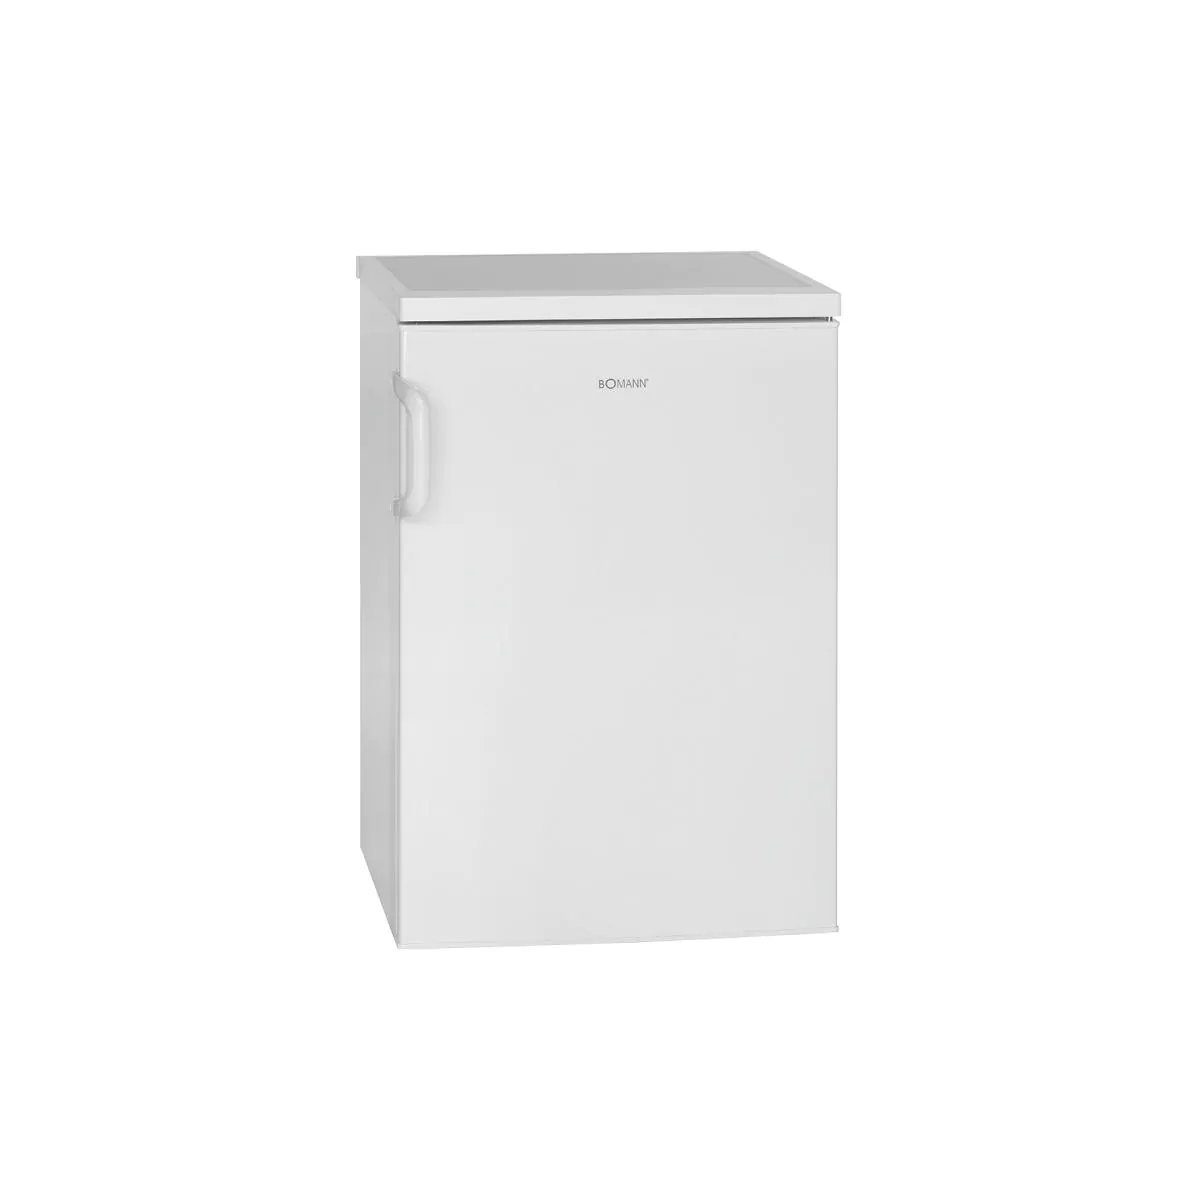 BOMANN Kühlschrank KS 2194.1 KS 2194.1, 84.5 cm hoch, 56.0 cm breit weiß